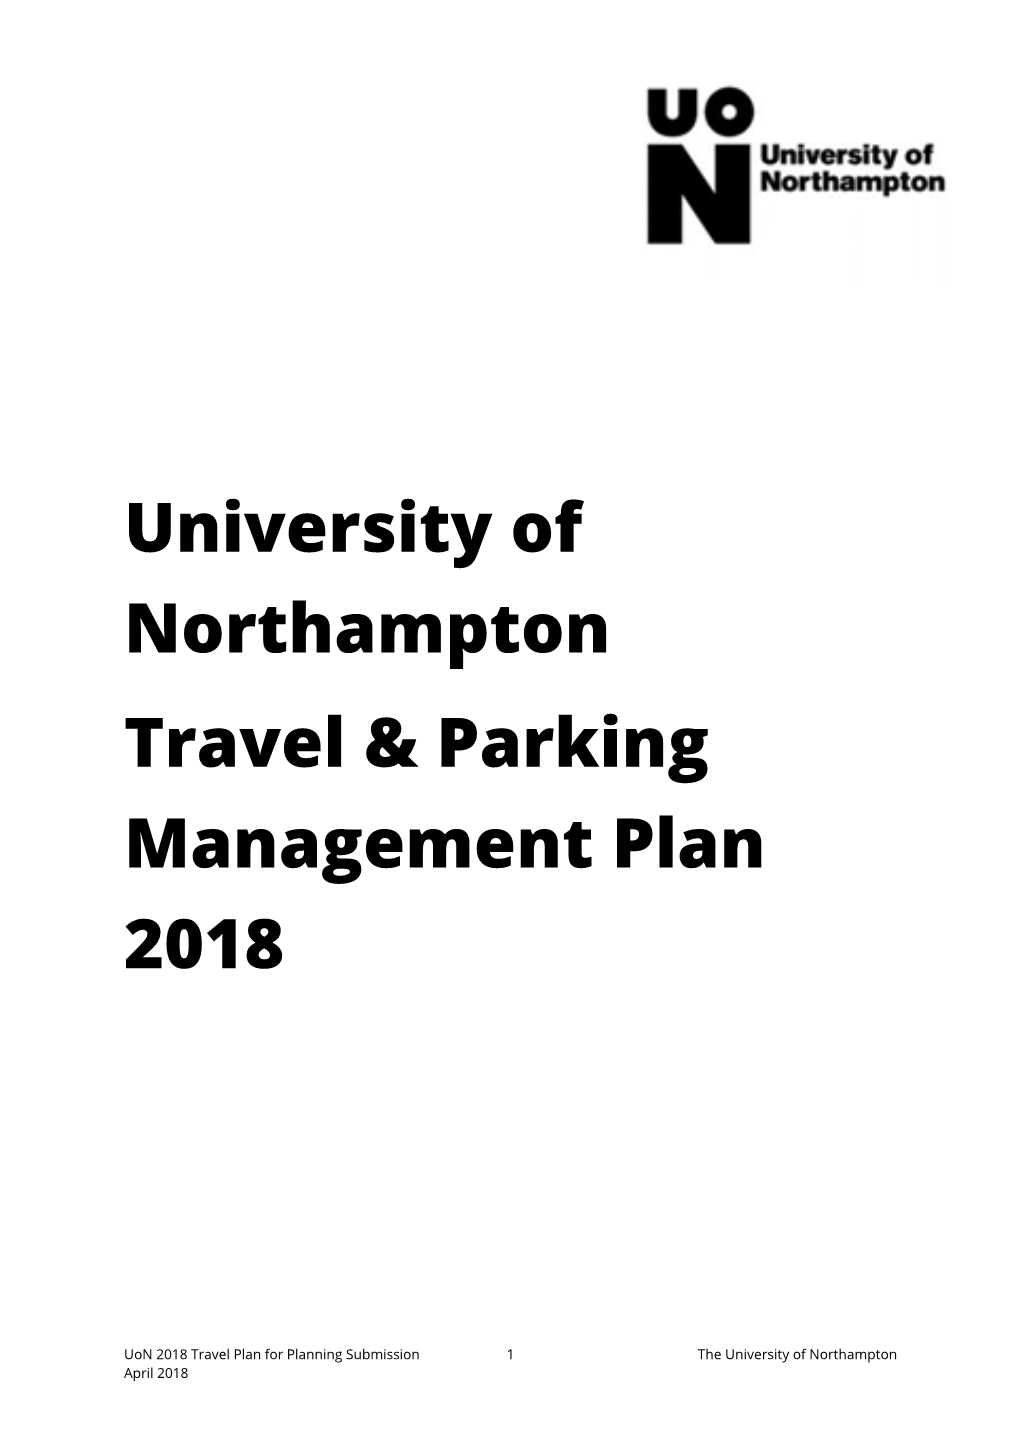 University of Northampton Travel & Parking Management Plan 2018